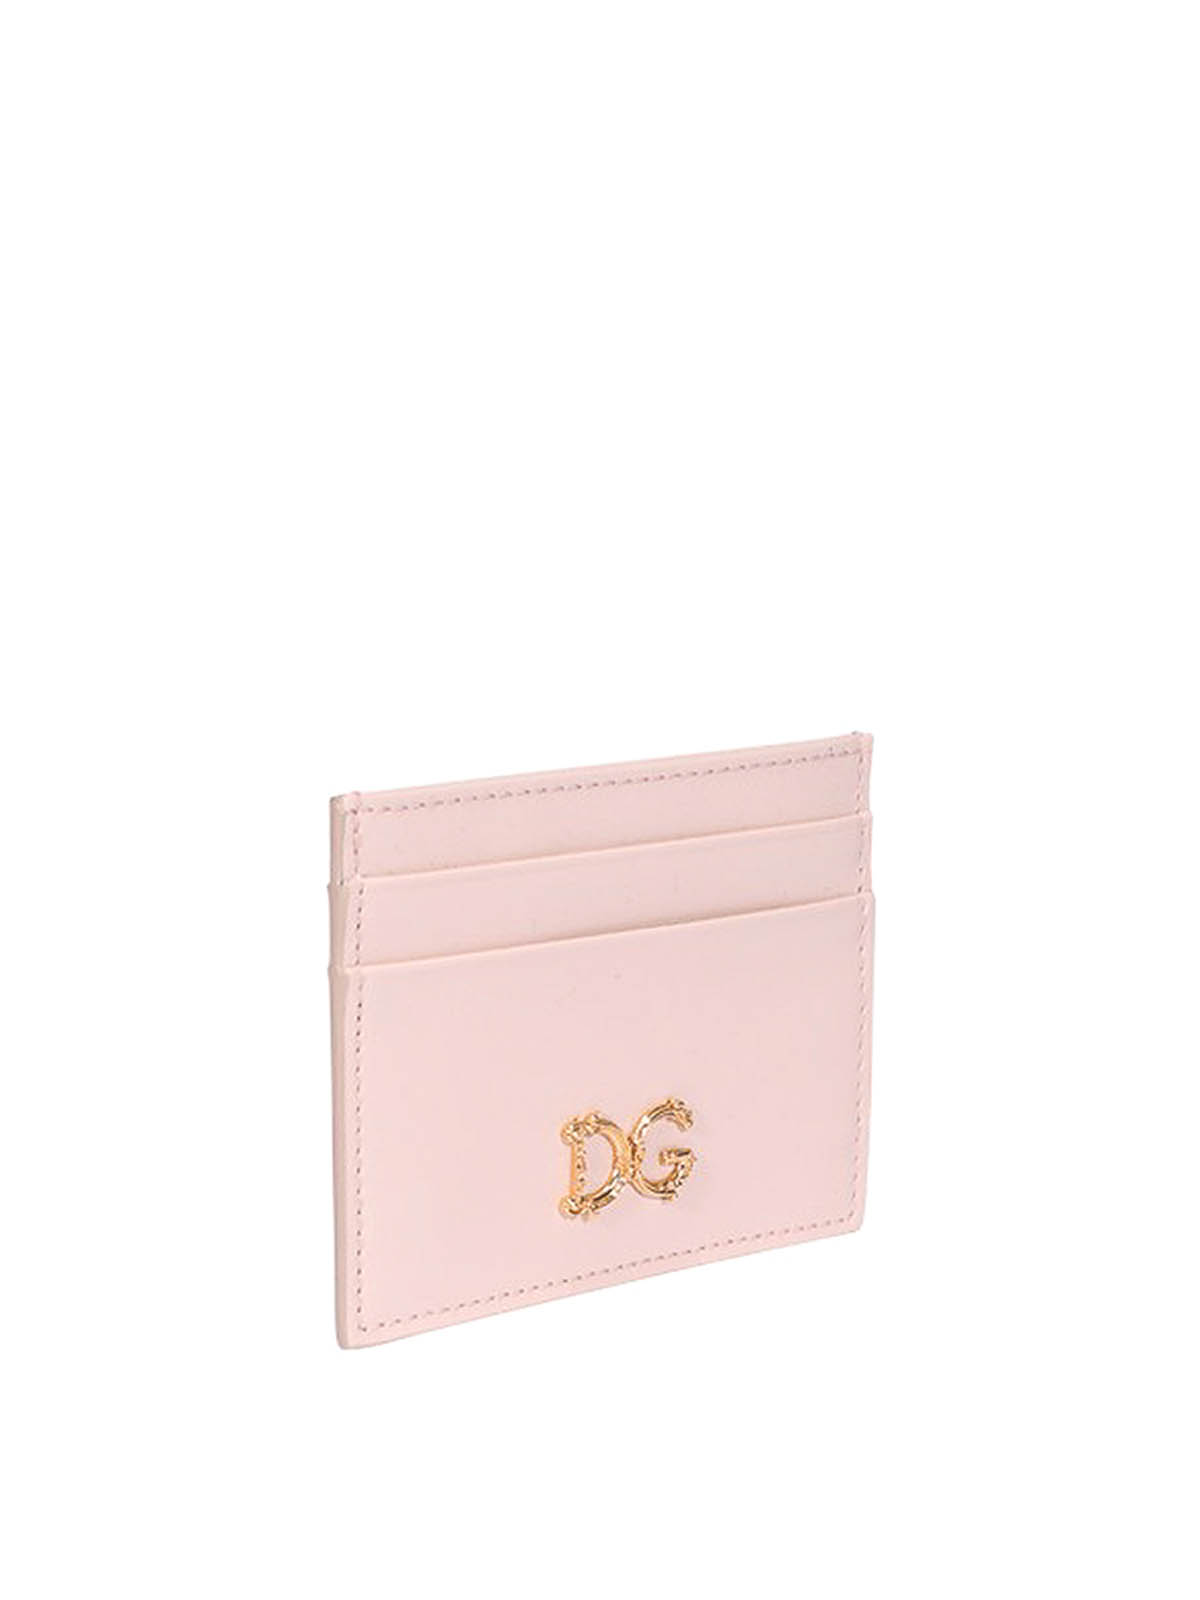 Dolce & Gabbana Lanyard Leather Cardholder - ShopStyle Wallets